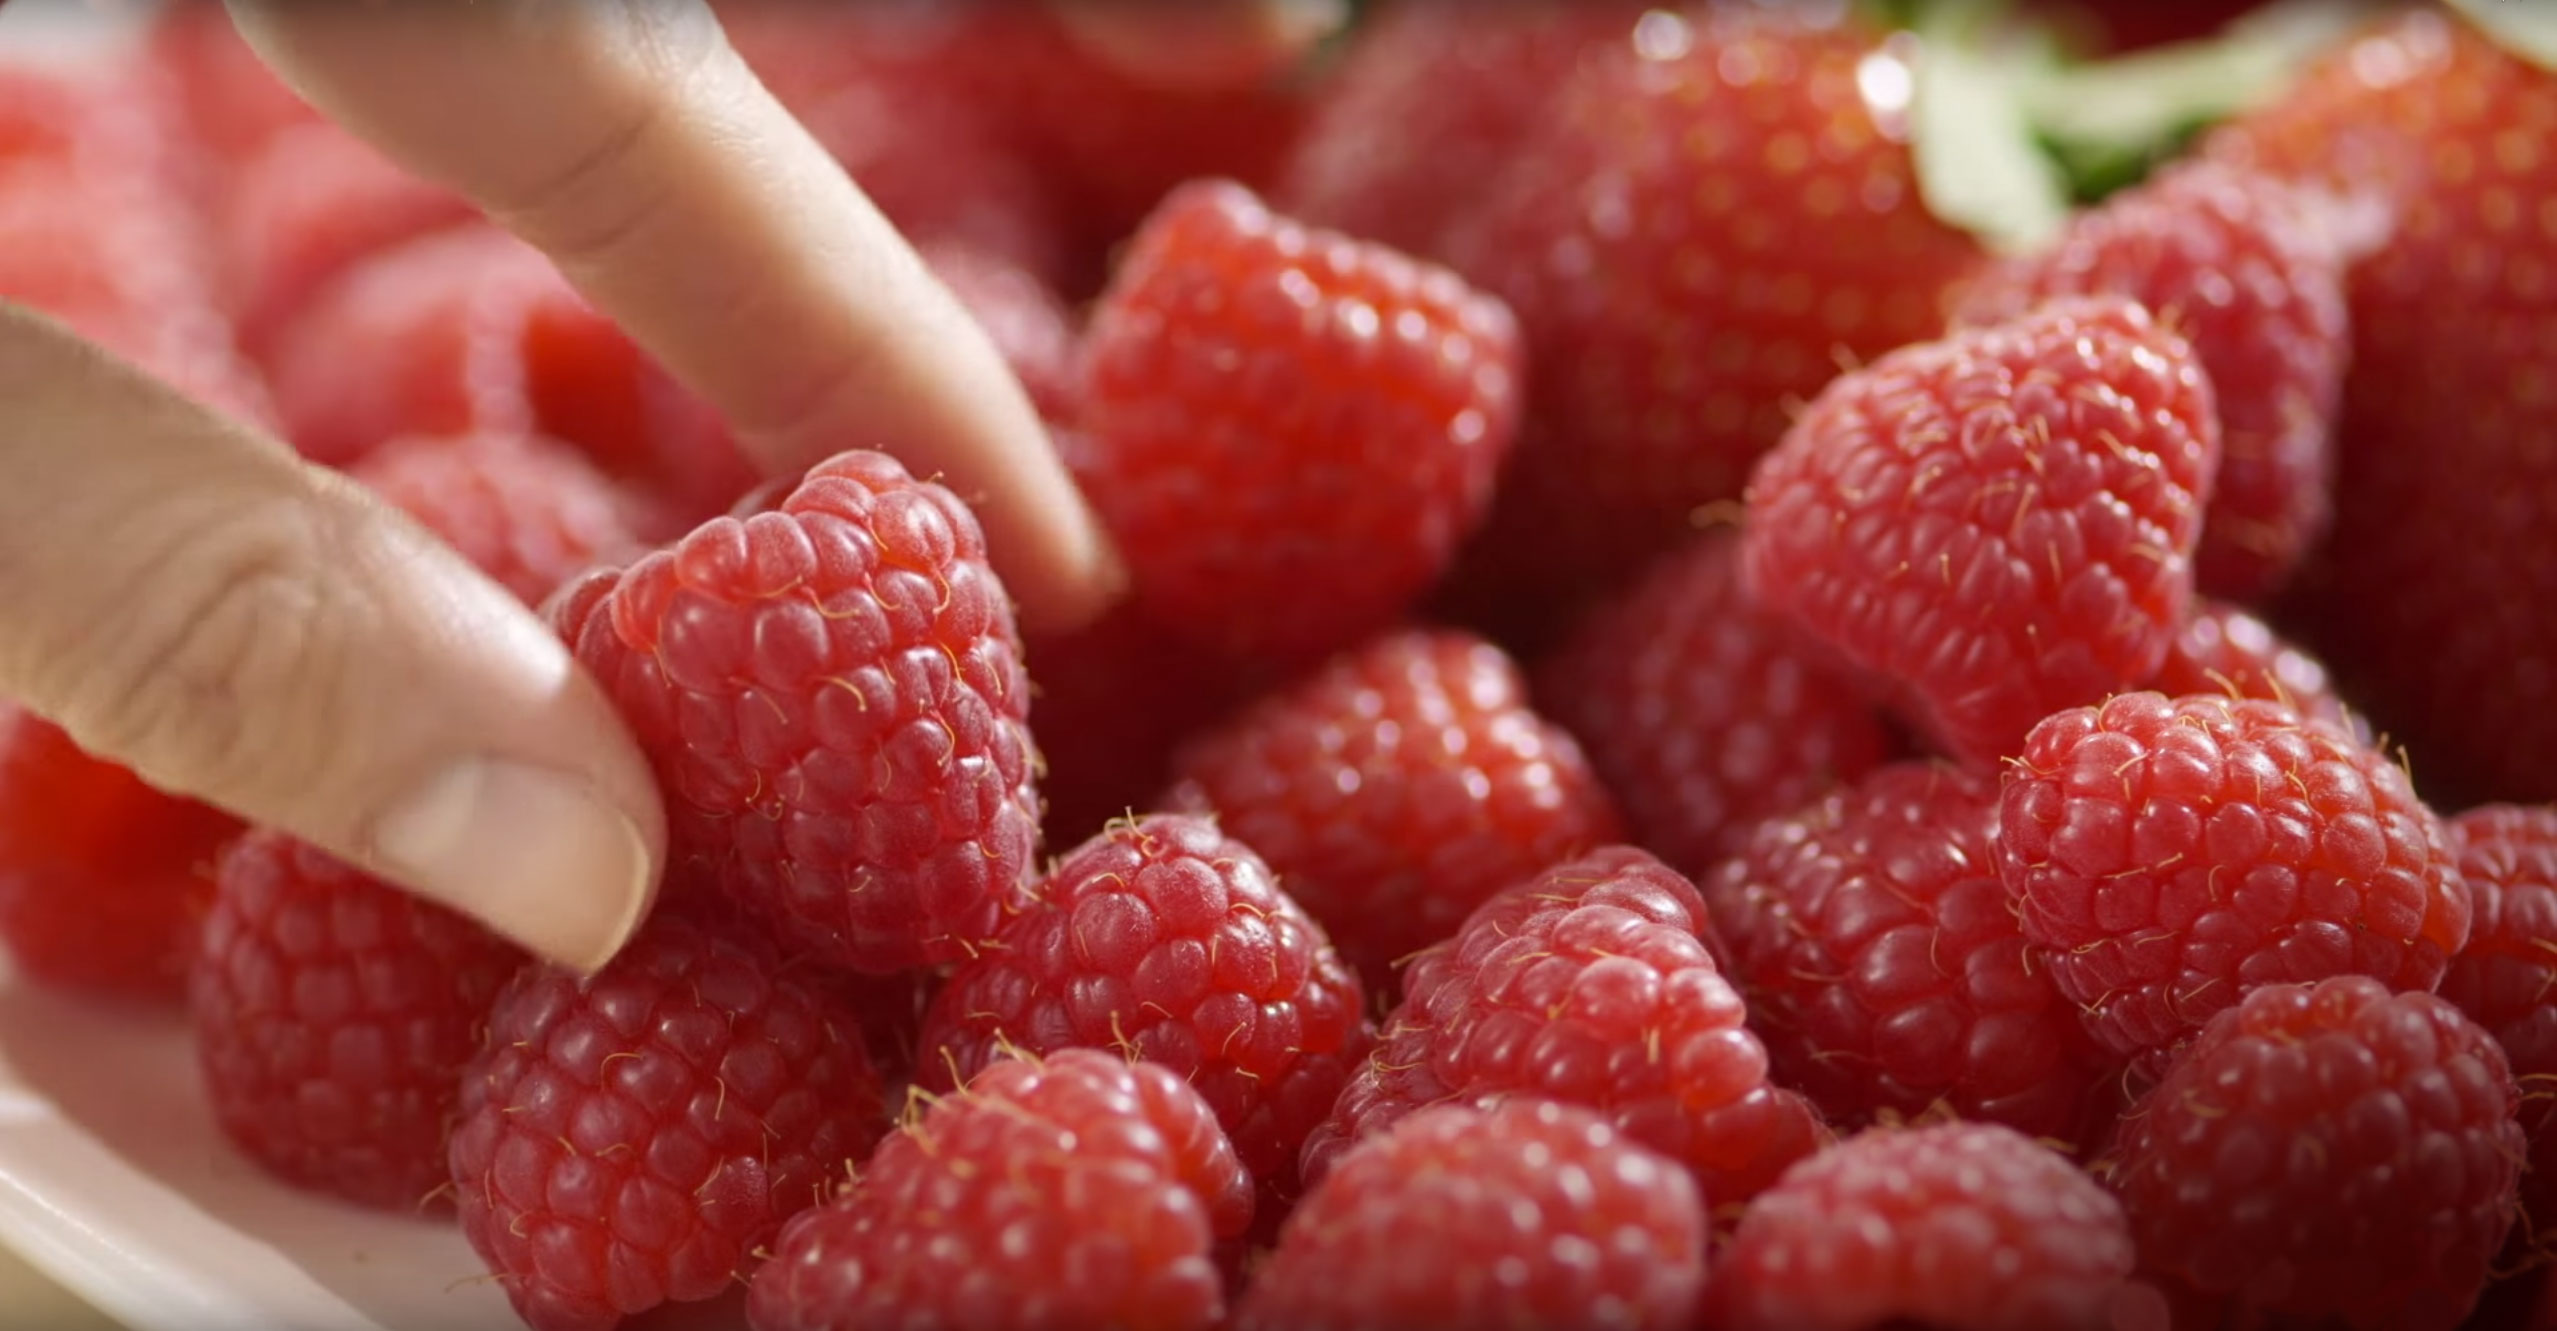 Raspberries & Organic Raspberries | Driscoll's